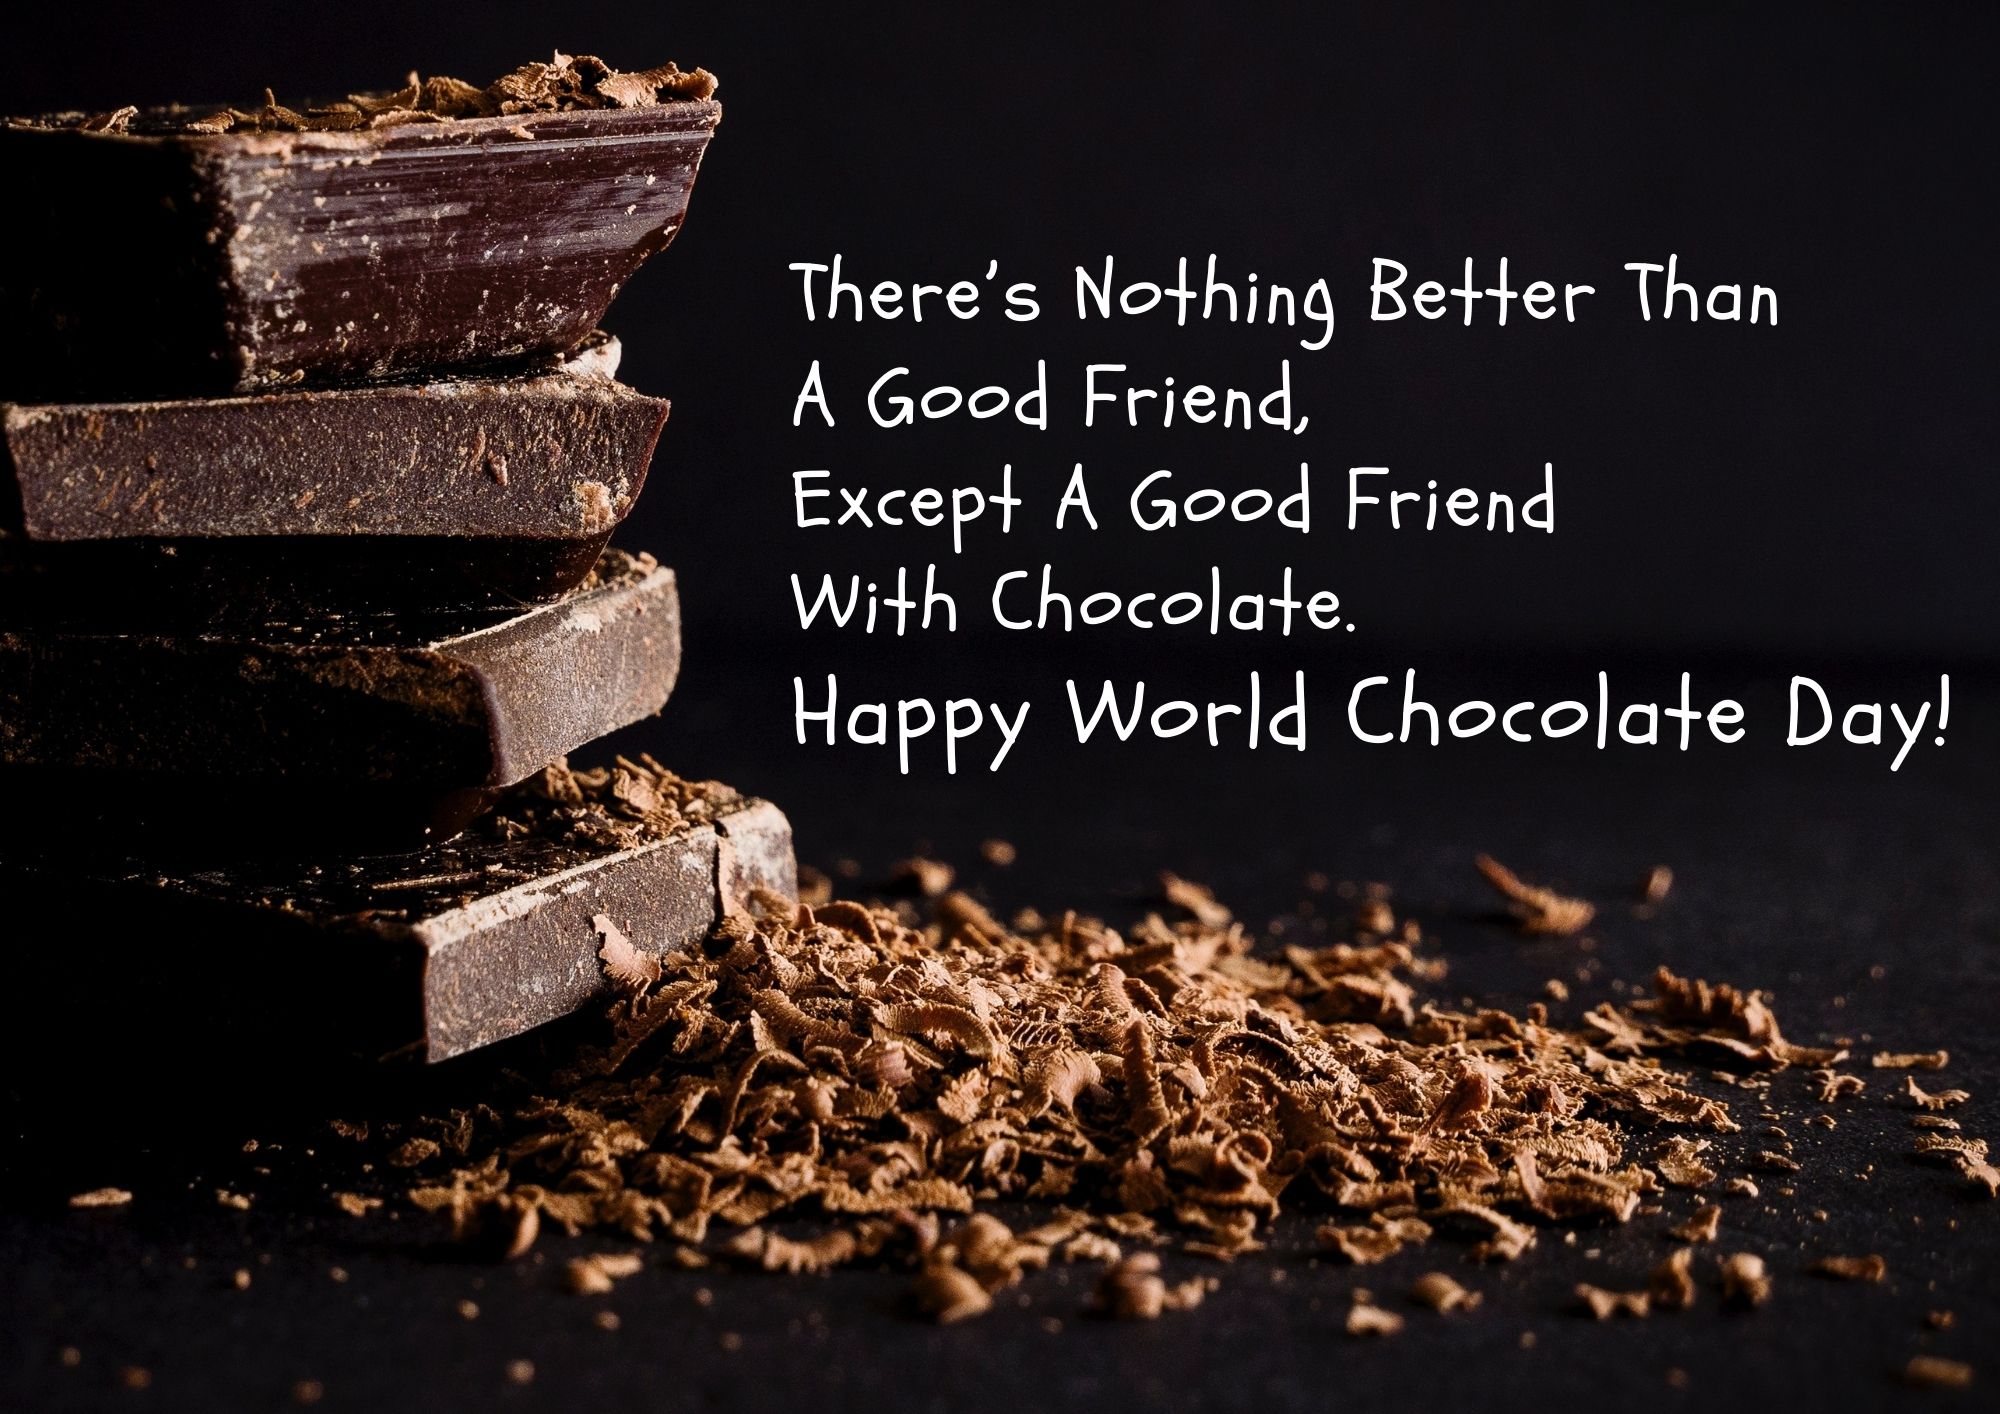 International Chocolate Day.